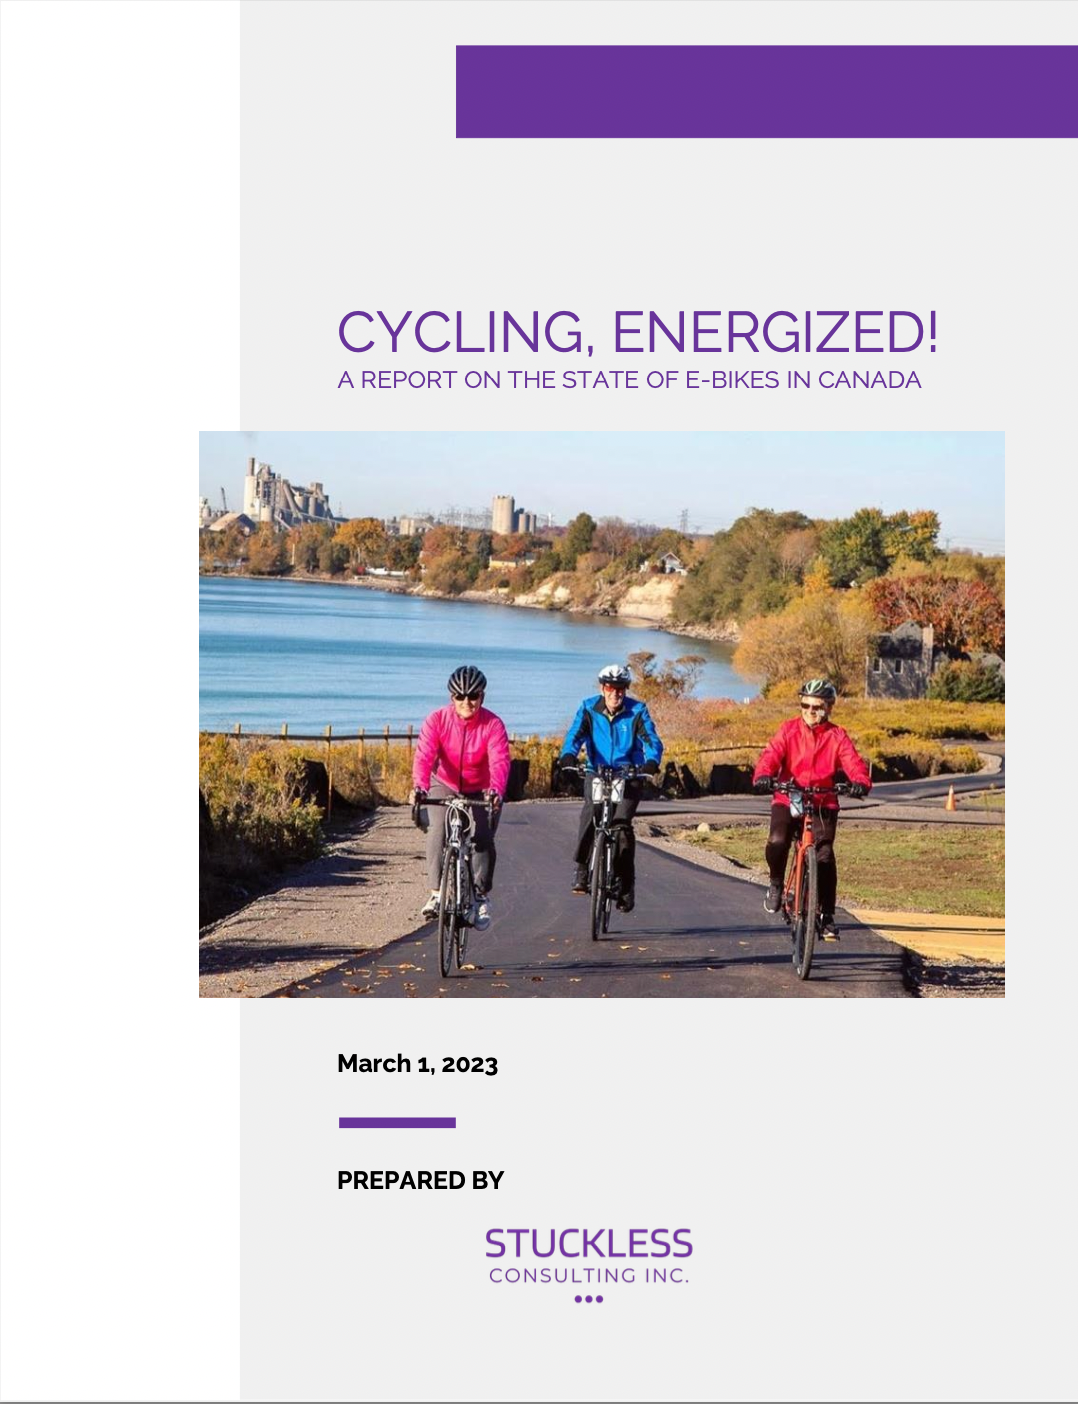 New screenshot of e-bike report